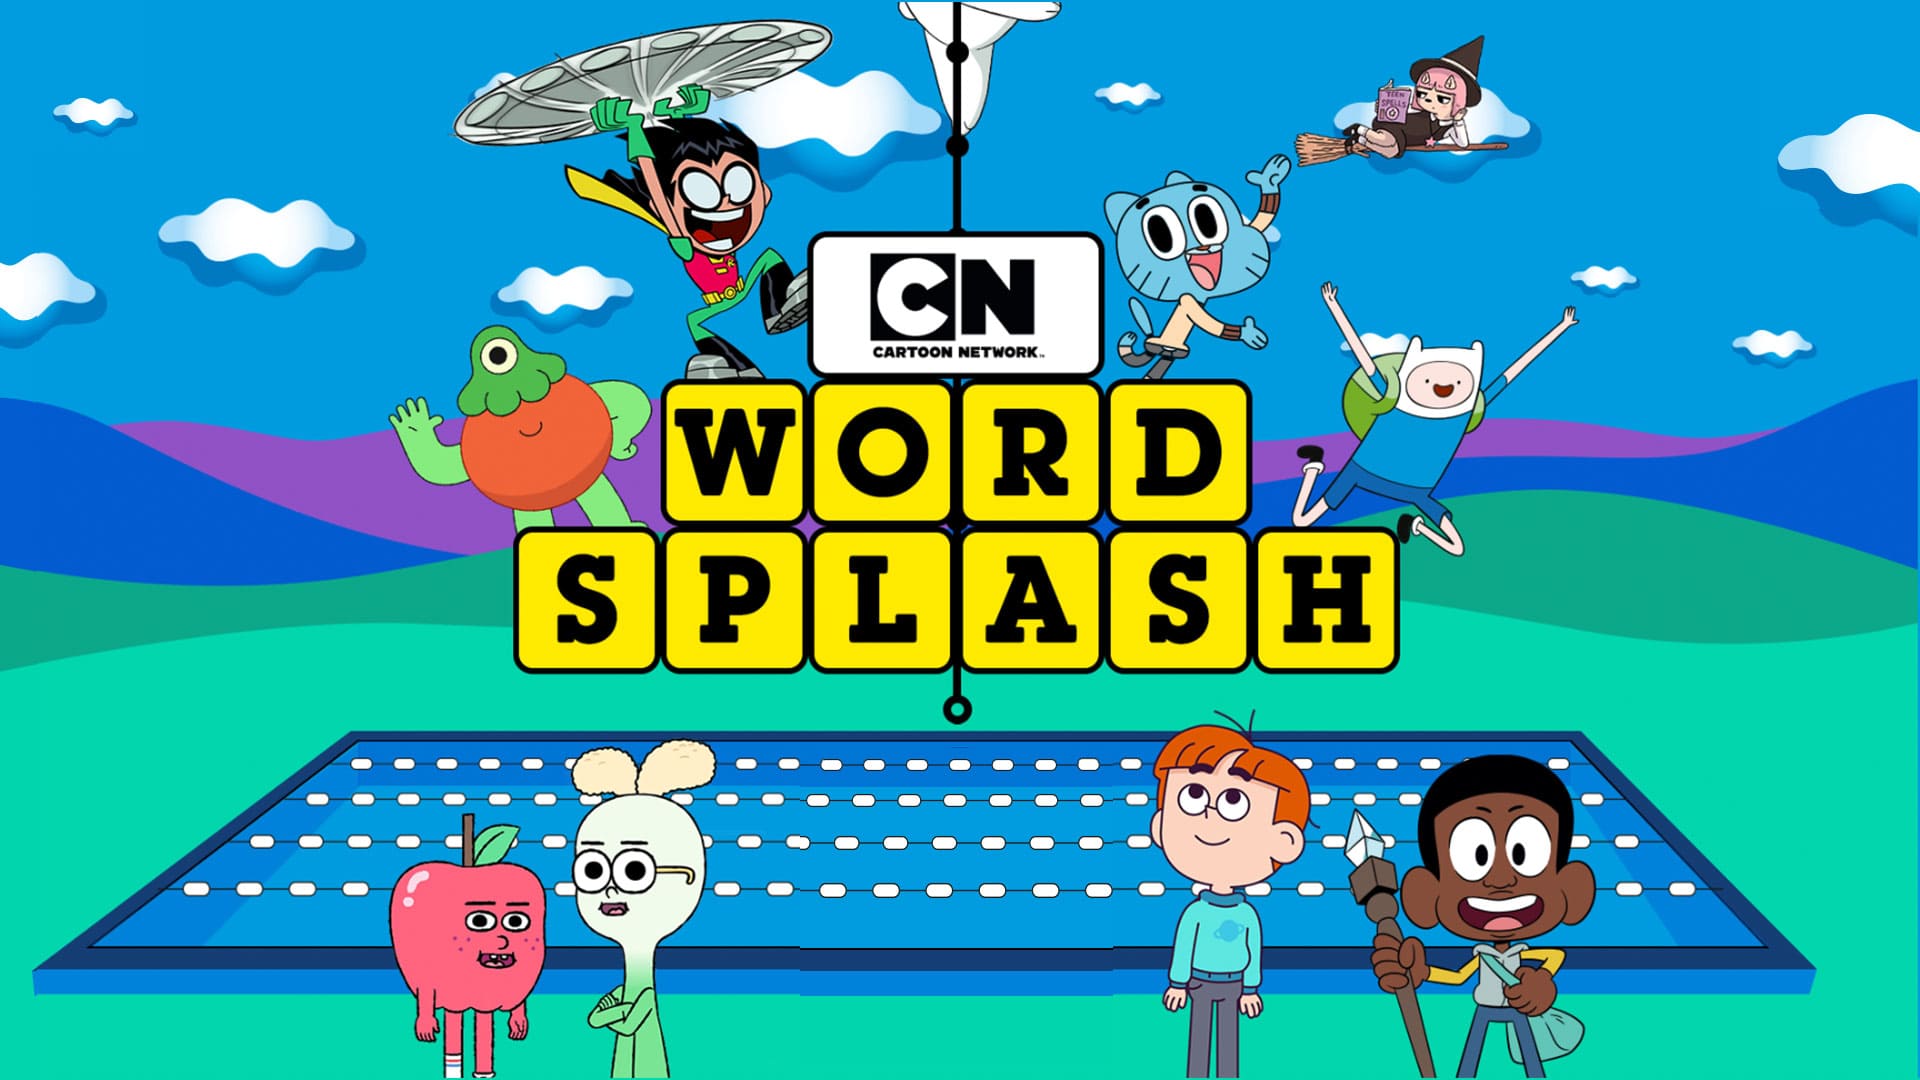 Cartoon network games